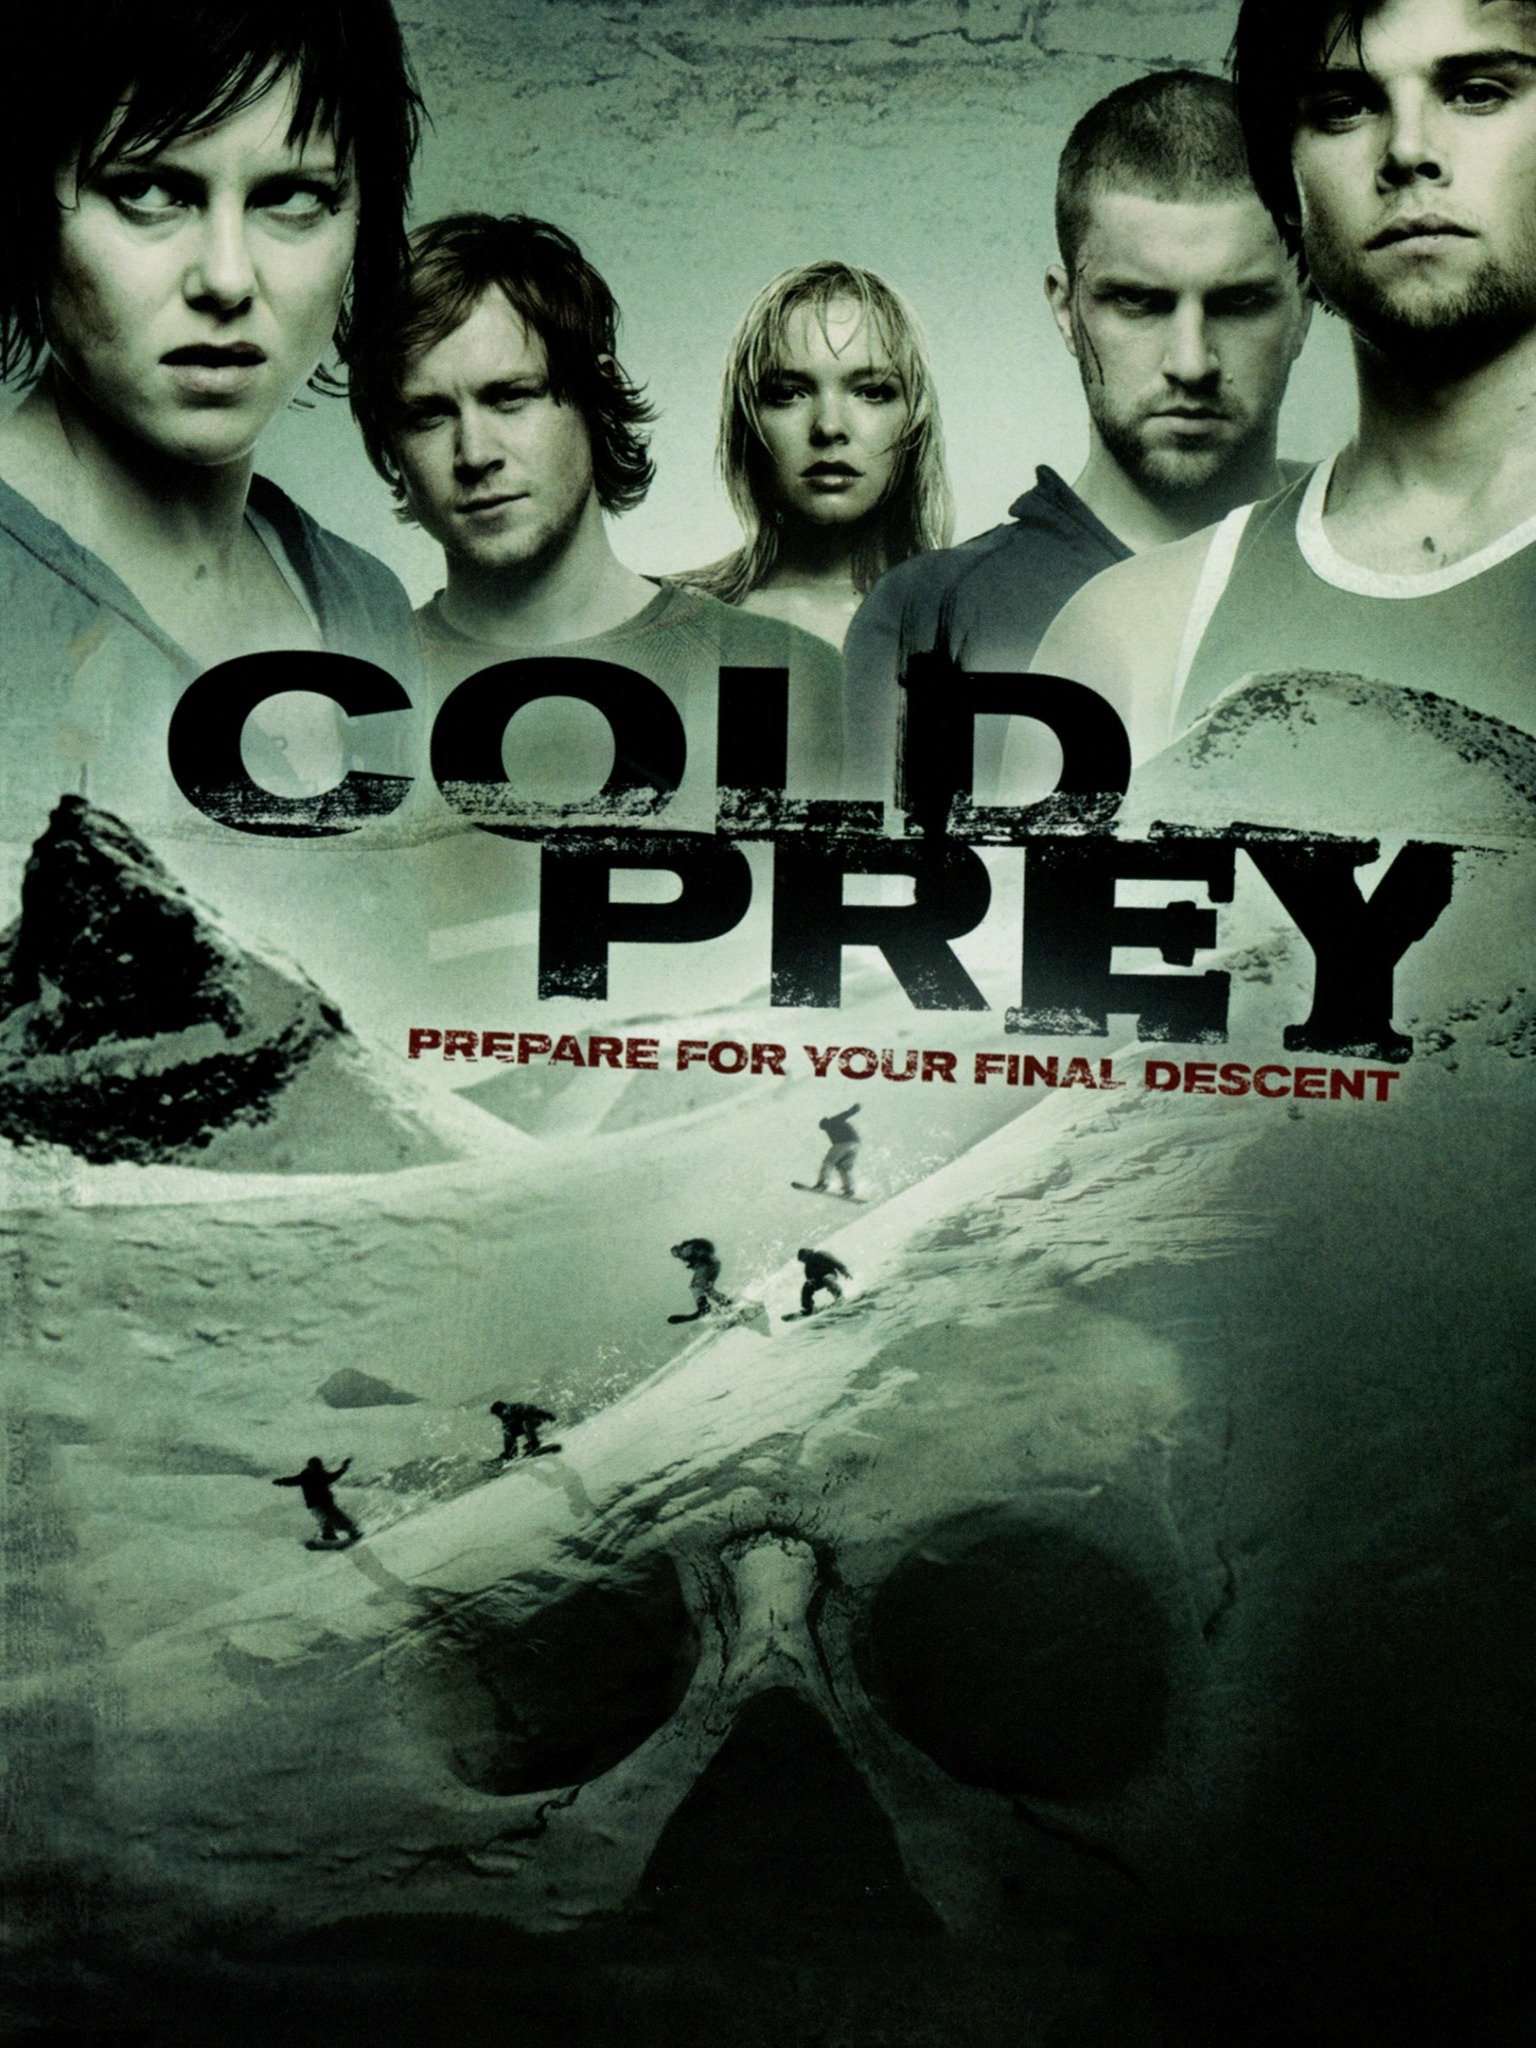 cold prey movie review